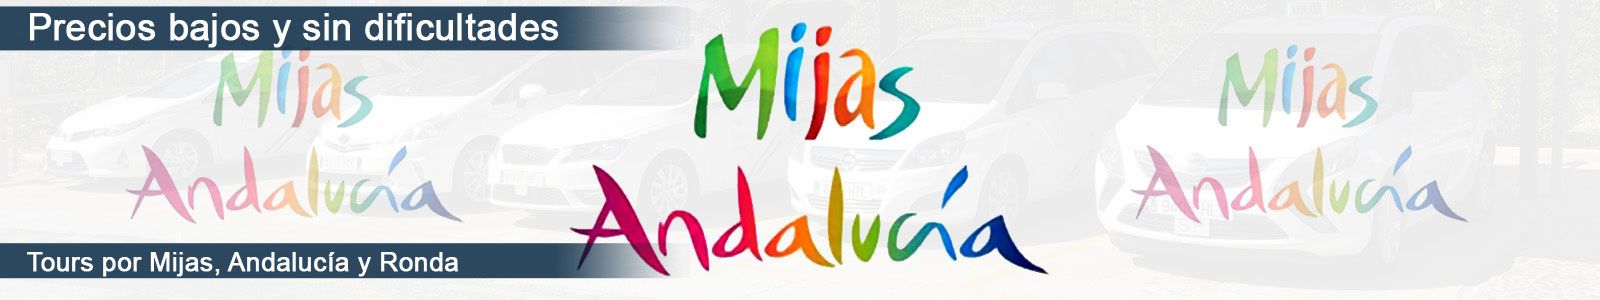 Radio Taxi Mijas banner 6